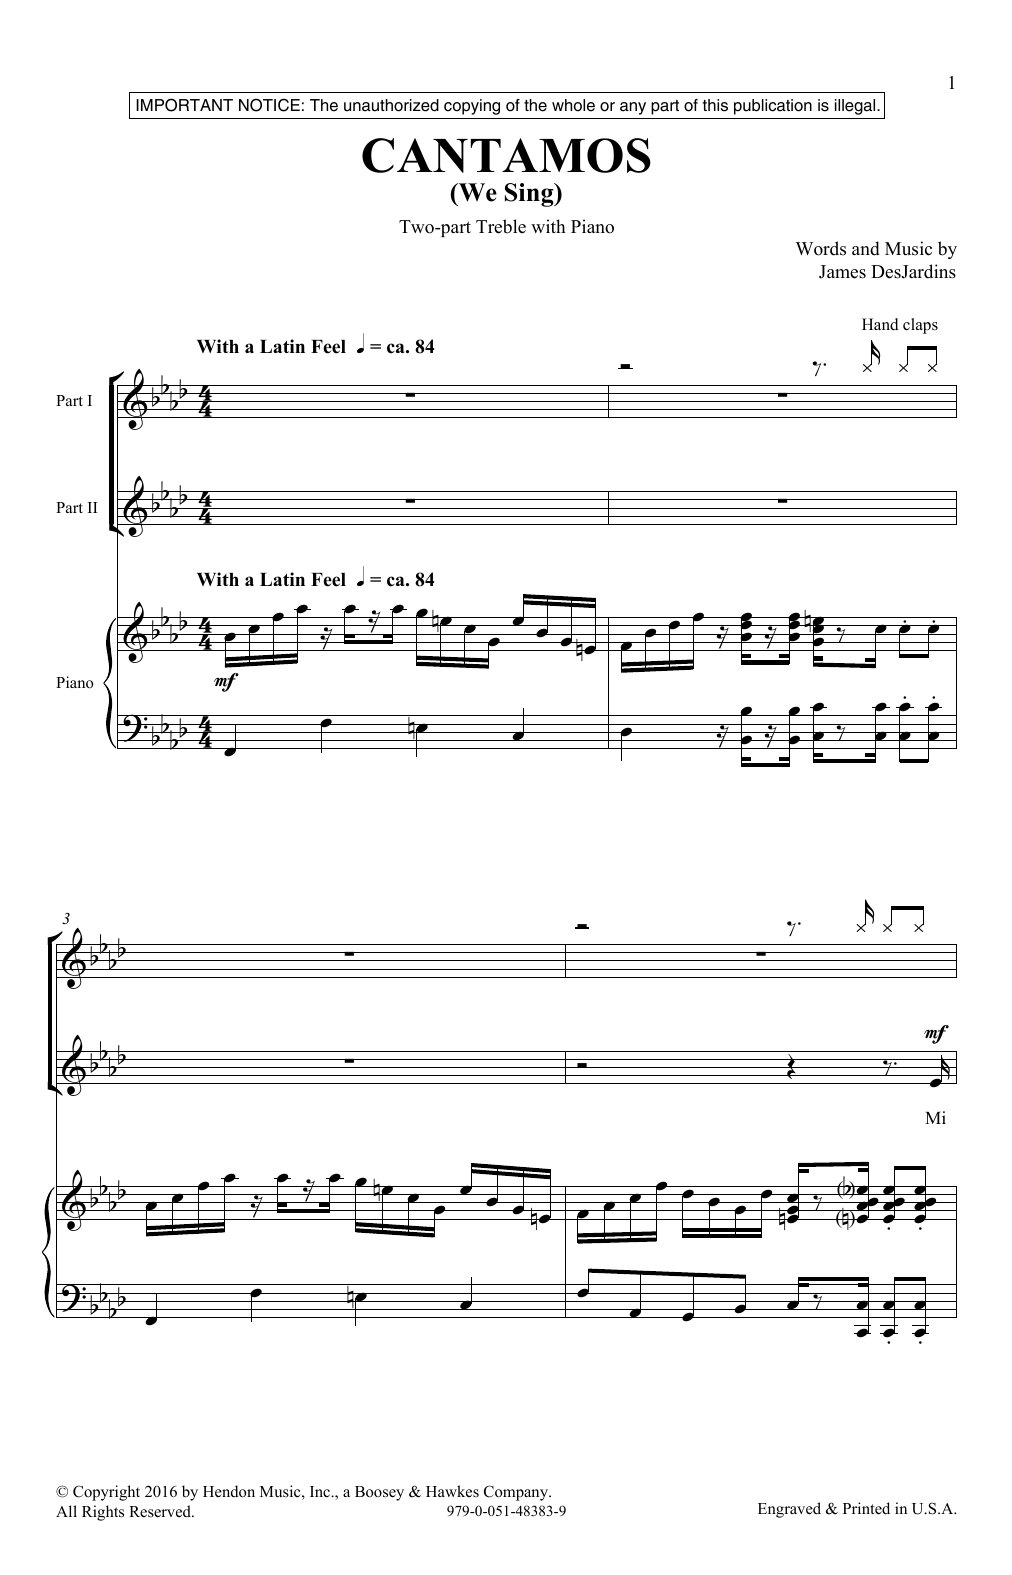 James DesJardins Cantamos Sheet Music Notes & Chords for 2-Part Choir - Download or Print PDF